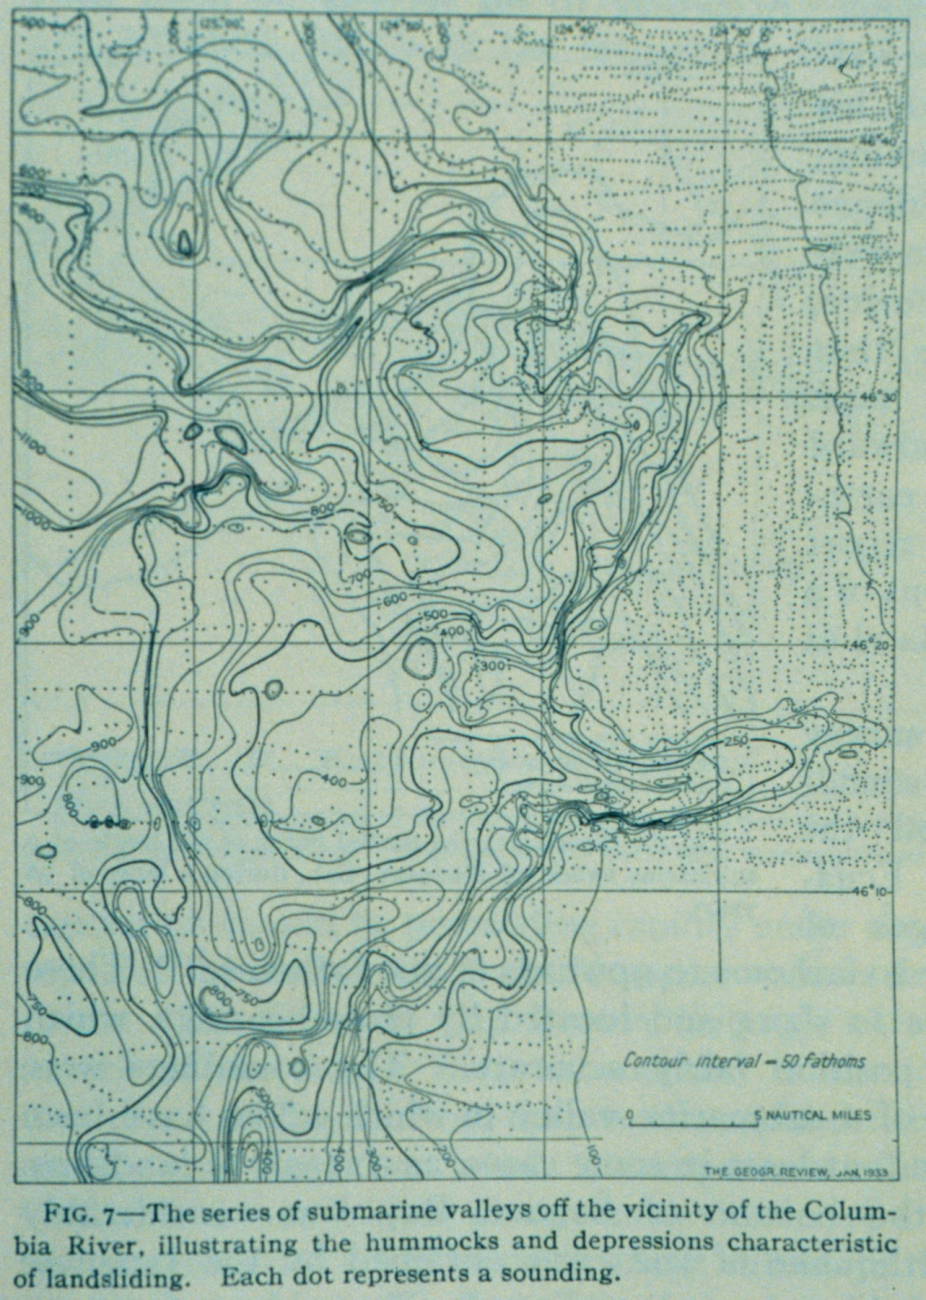 The discovery survey of Astoria Canyon off the Oregon coast